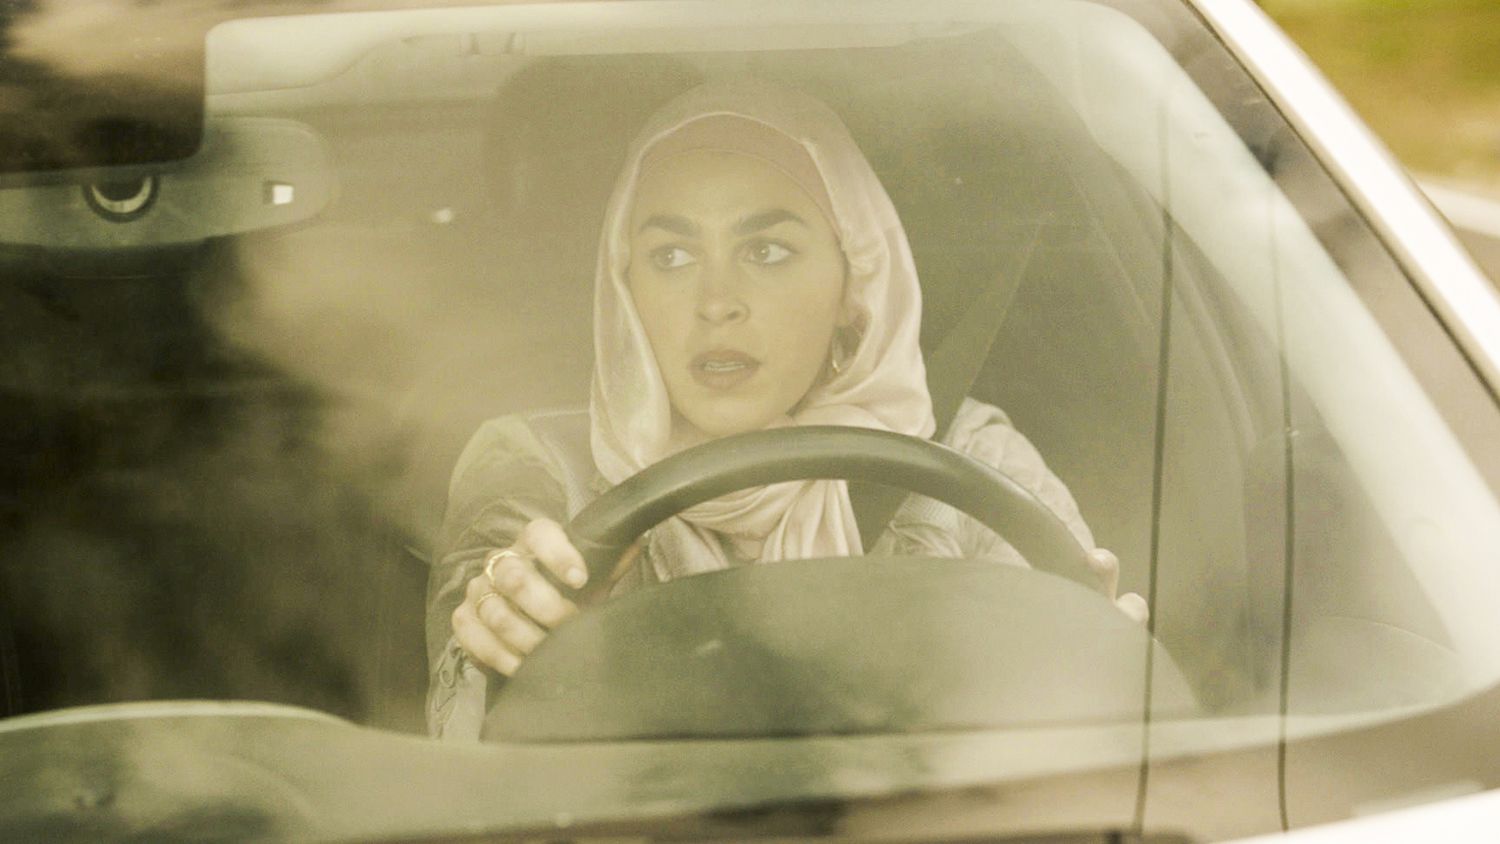 Natacha Karam as Marjan on the road on '9-1-1: Lone Star'